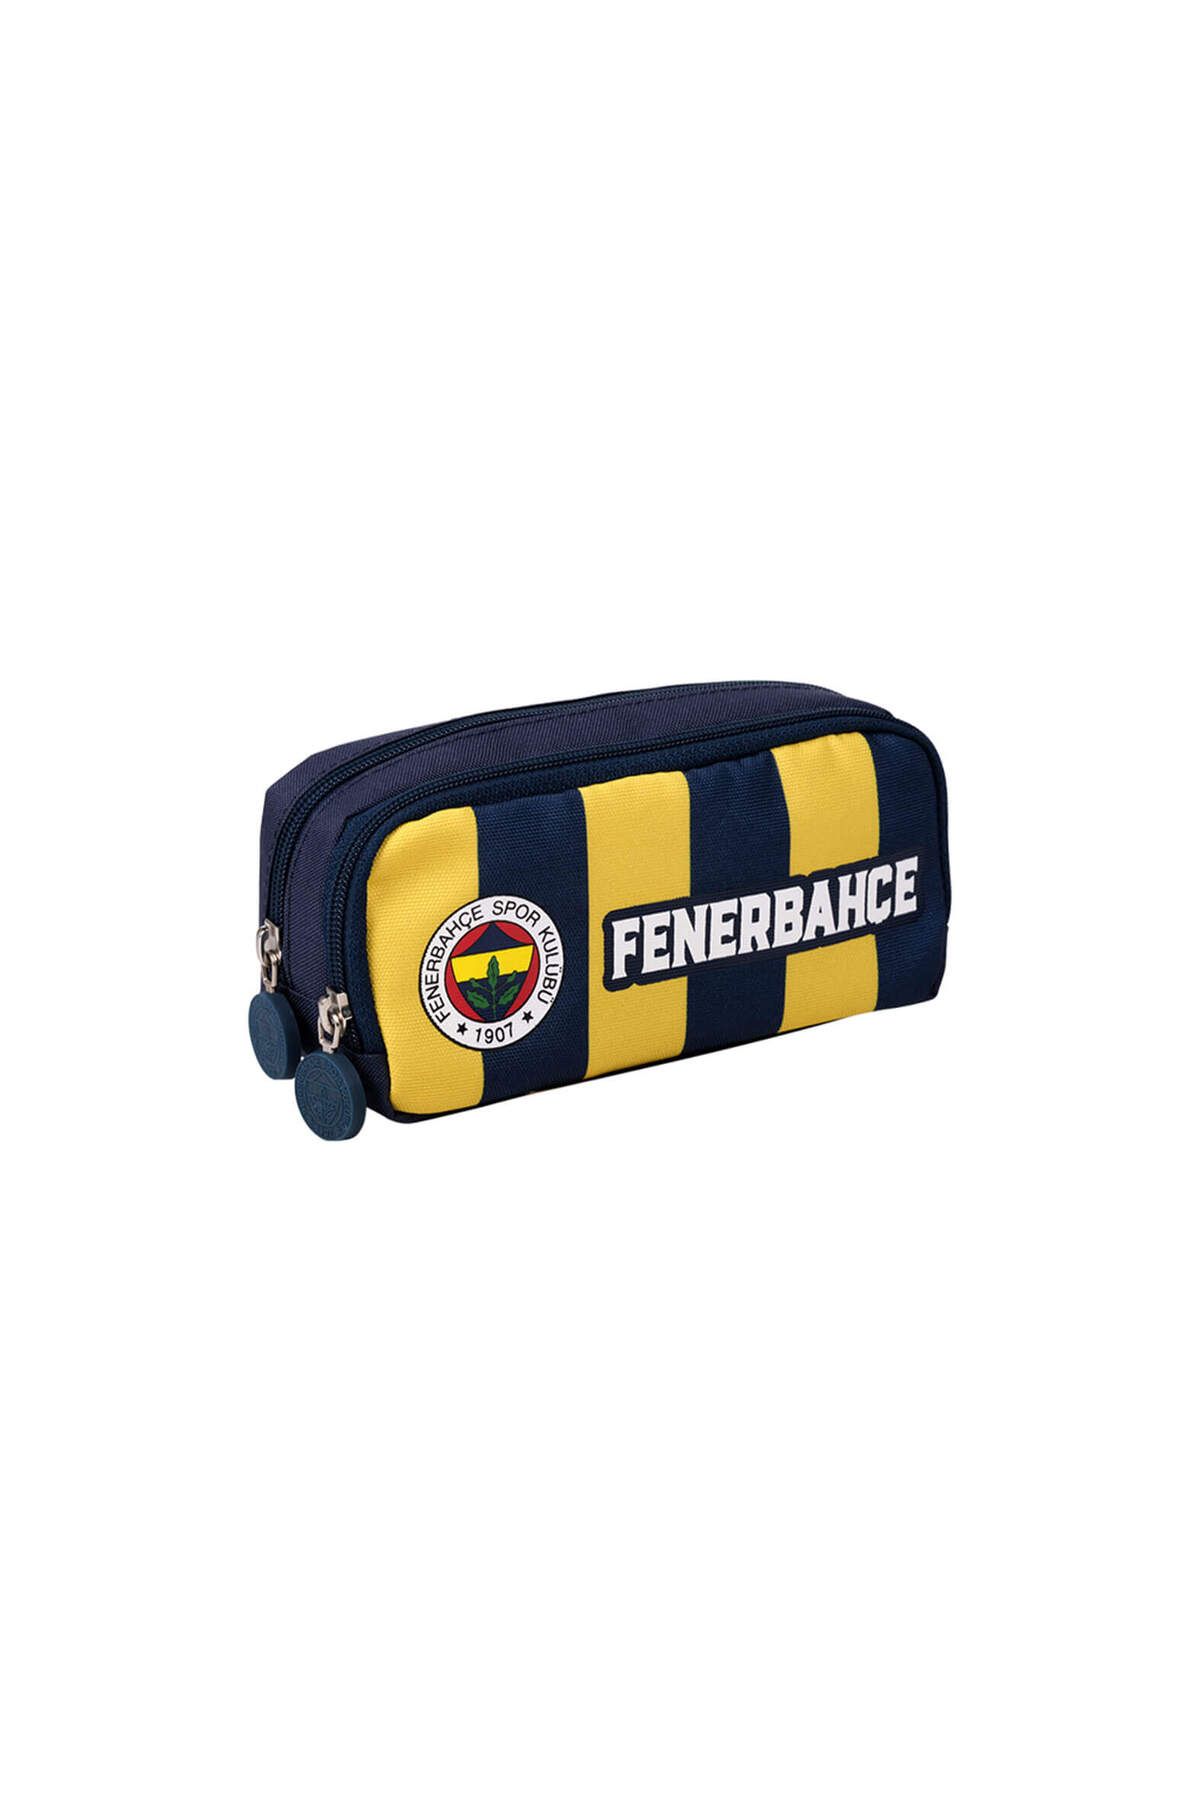 Fenerbahçe FENERBAHCE CUBUKLU FORMA DESEN KALEM